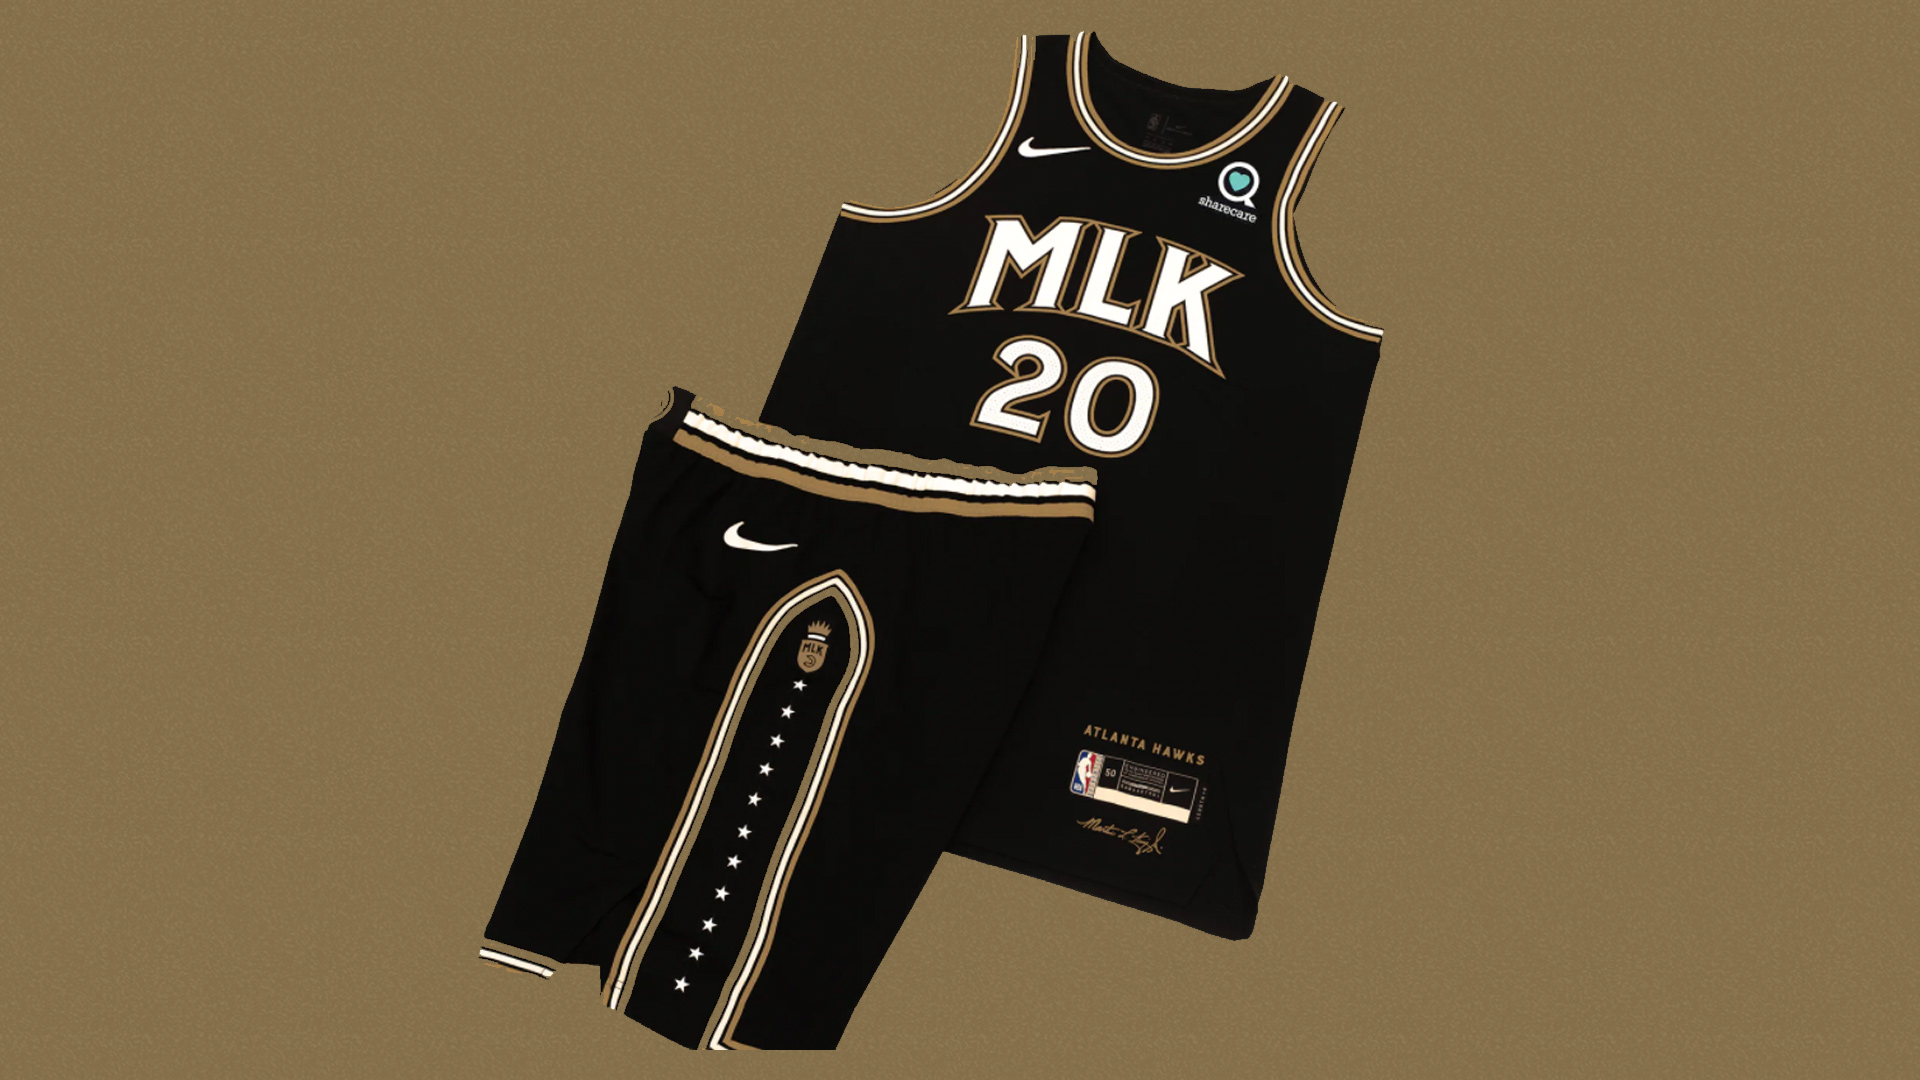 Hawks' city edition uniform honors MLK legacy